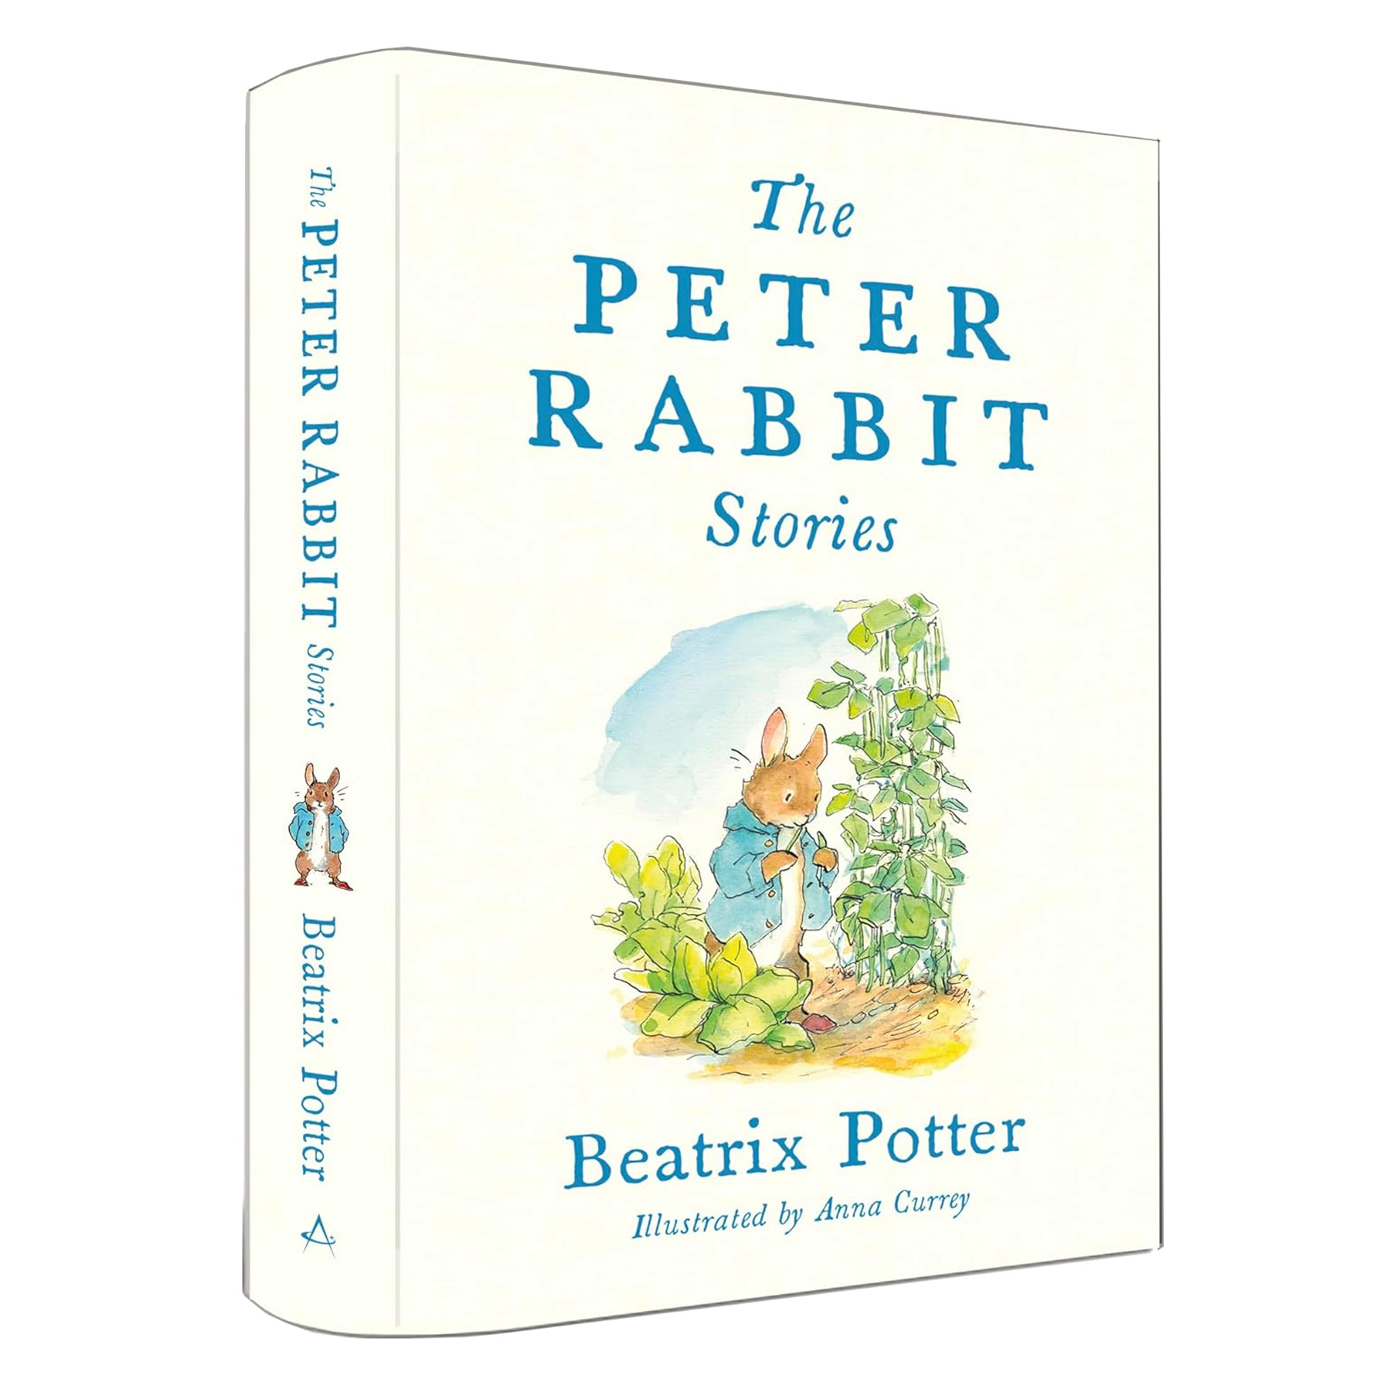  The Peter Rabbit Stories